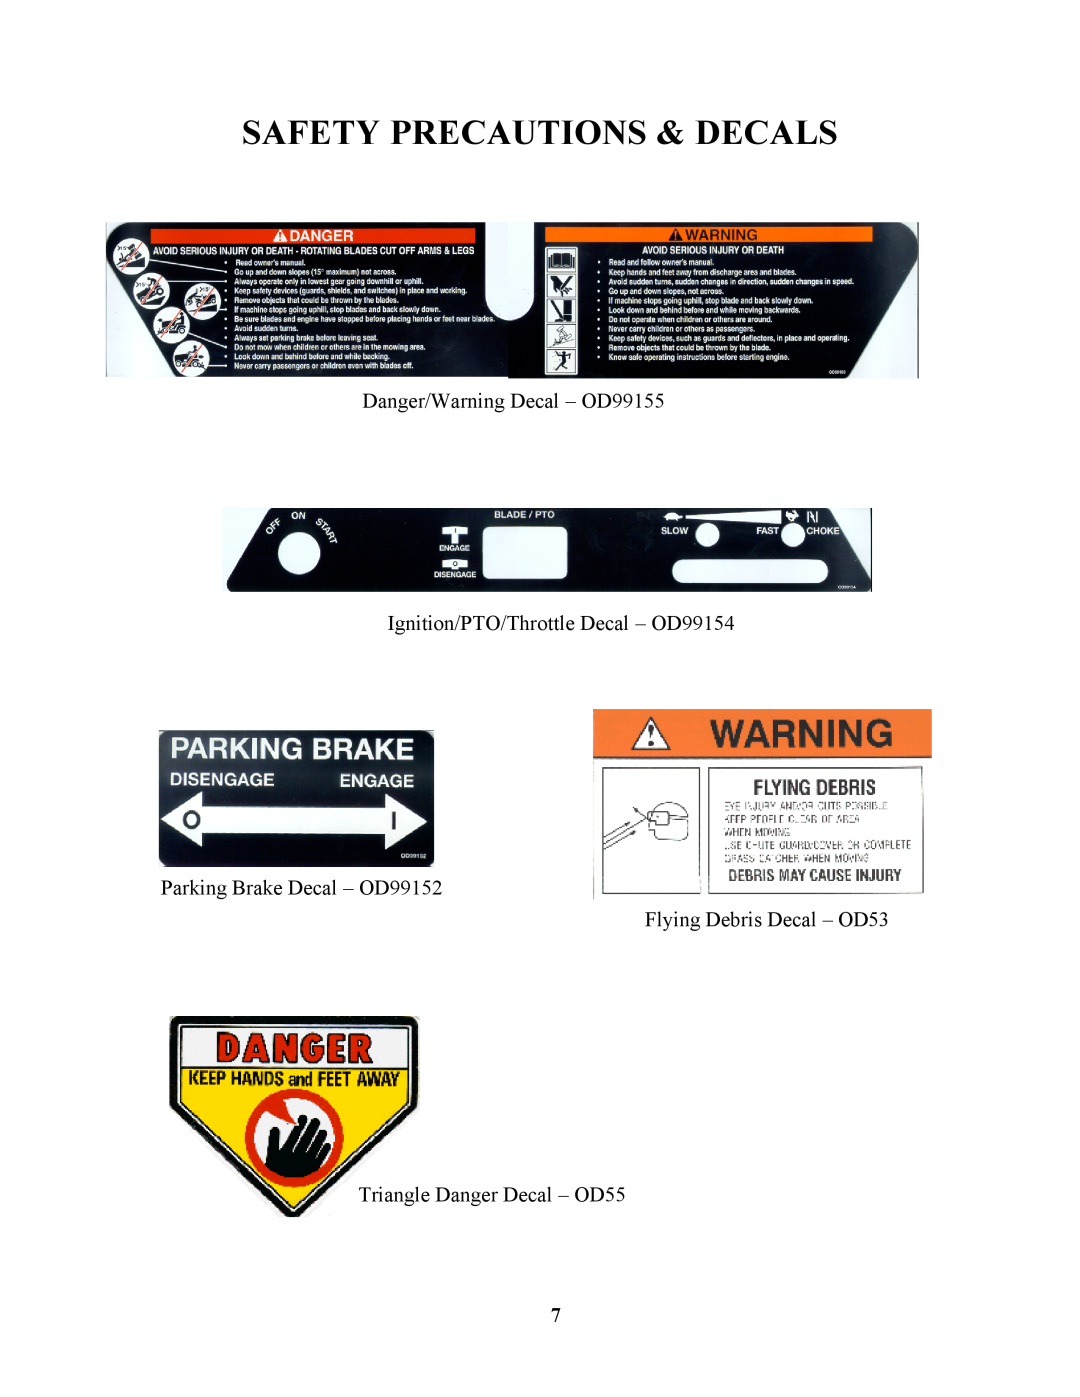 Swisher ZT20050, ZT13536, ZT17542B Safety Precautions & Decals, Danger/Warning Decal - OD99155, Flying Debris Decal - OD53 